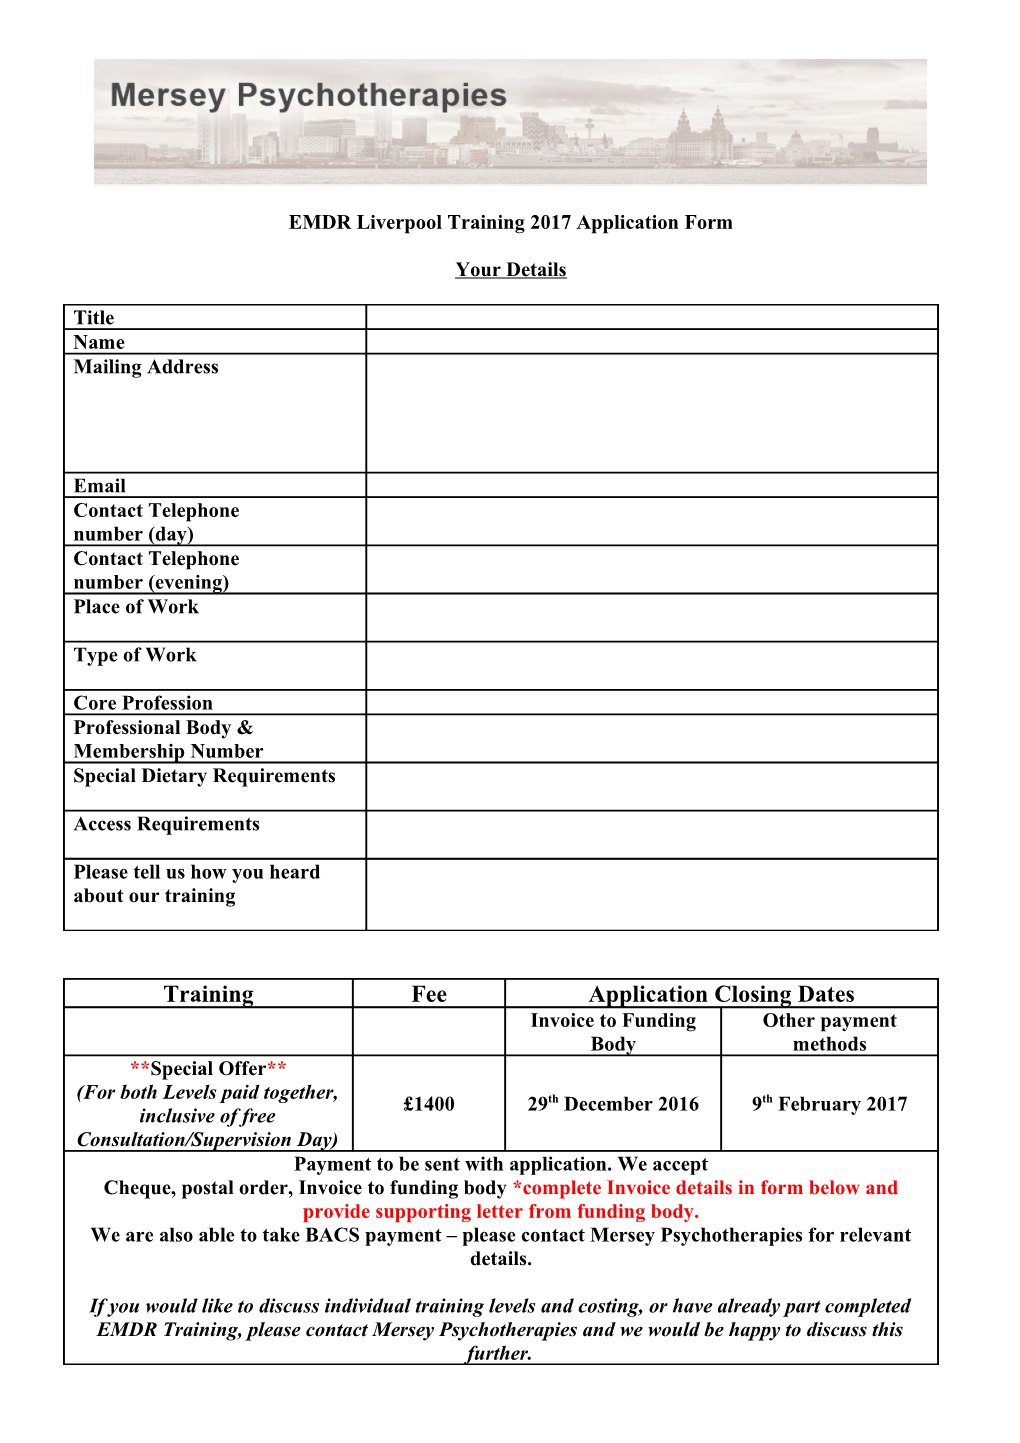 EMDR Liverpool Training Application Form